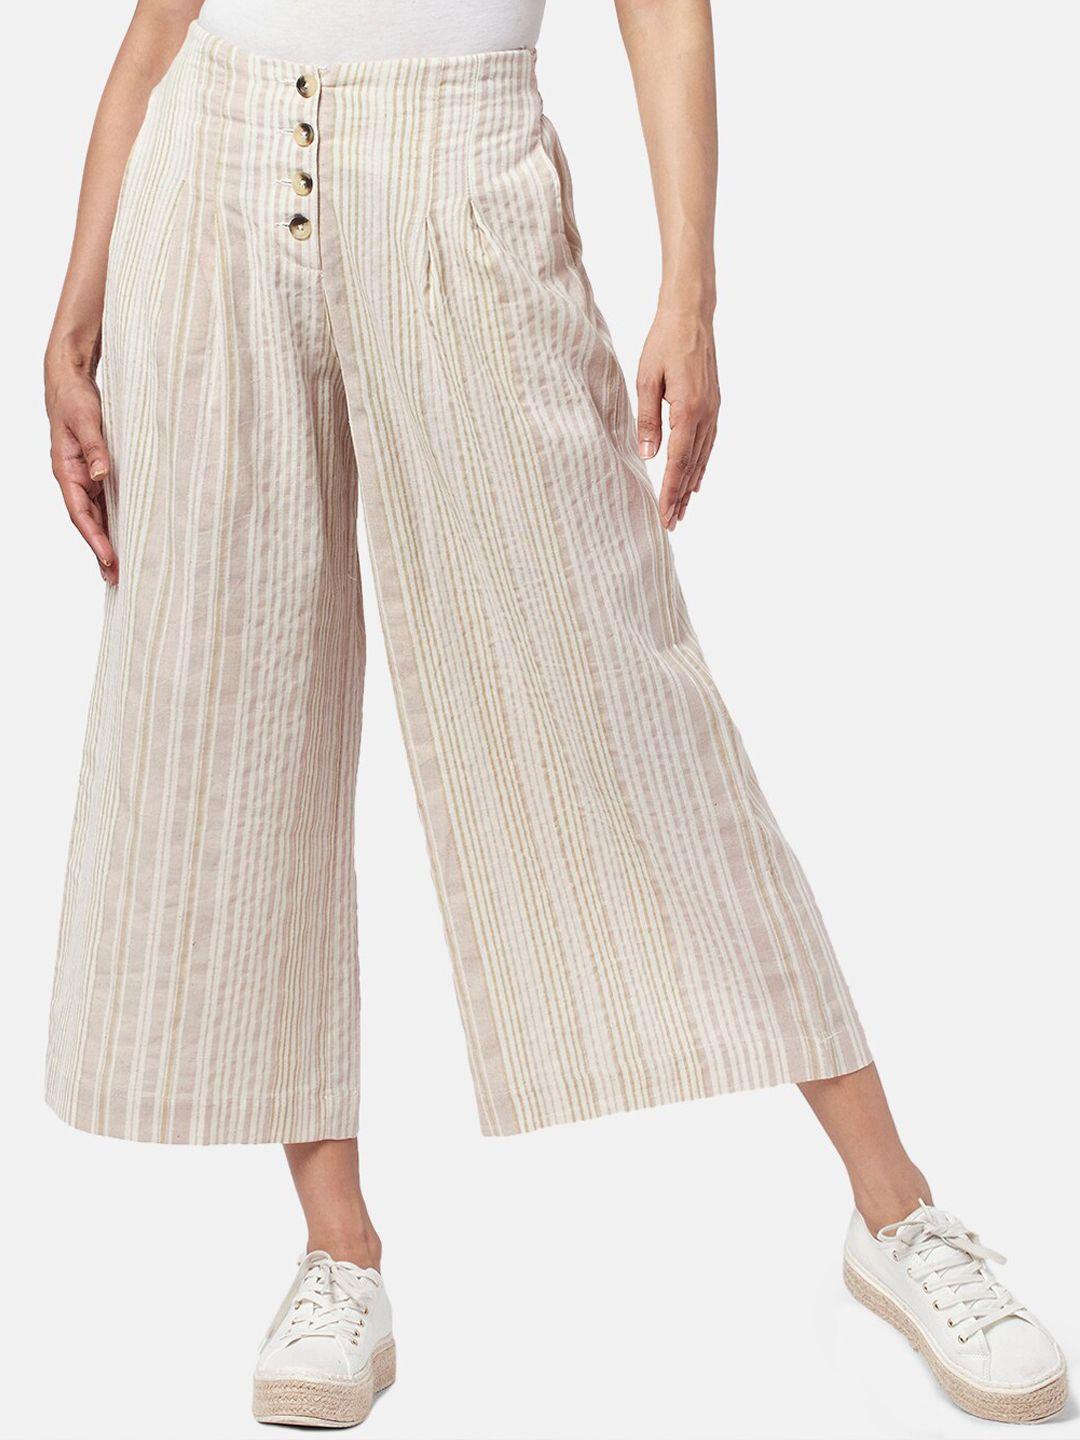 akkriti by pantaloons women striped cotton flared culottes trousers